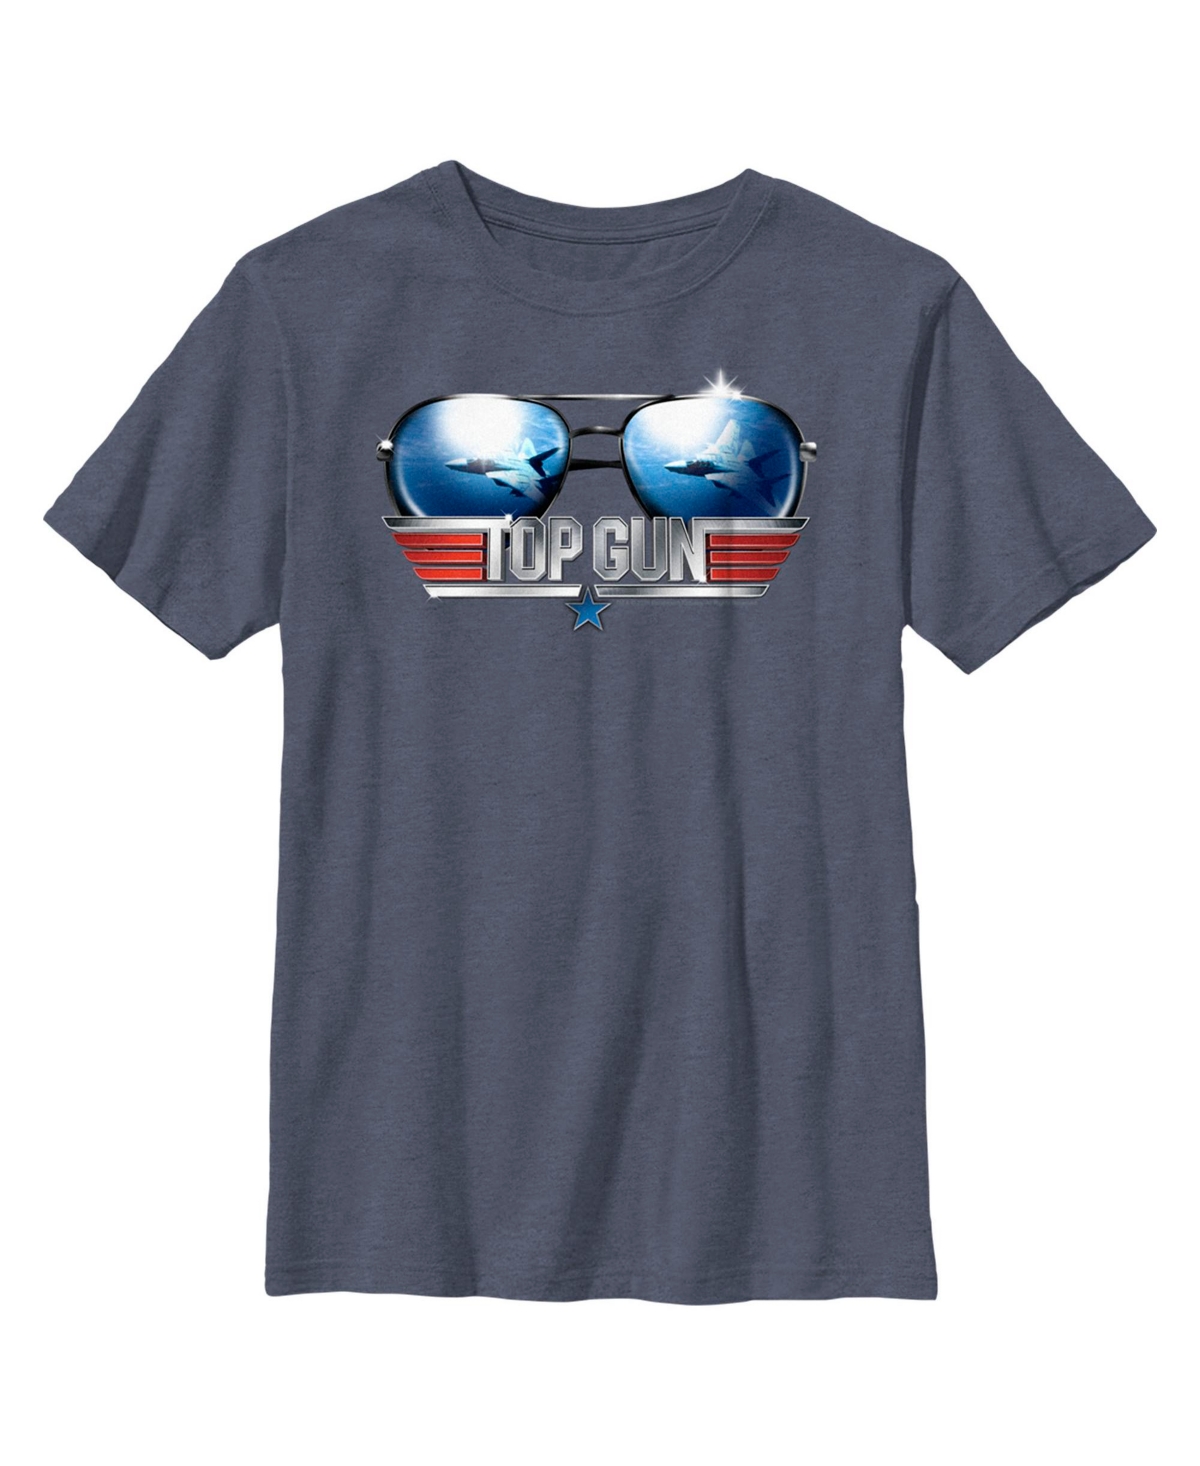 Paramount Pictures Kids' Boy's Top Gun Aviator Sunglasses Logo Child T-shirt In Navy Blue Heather